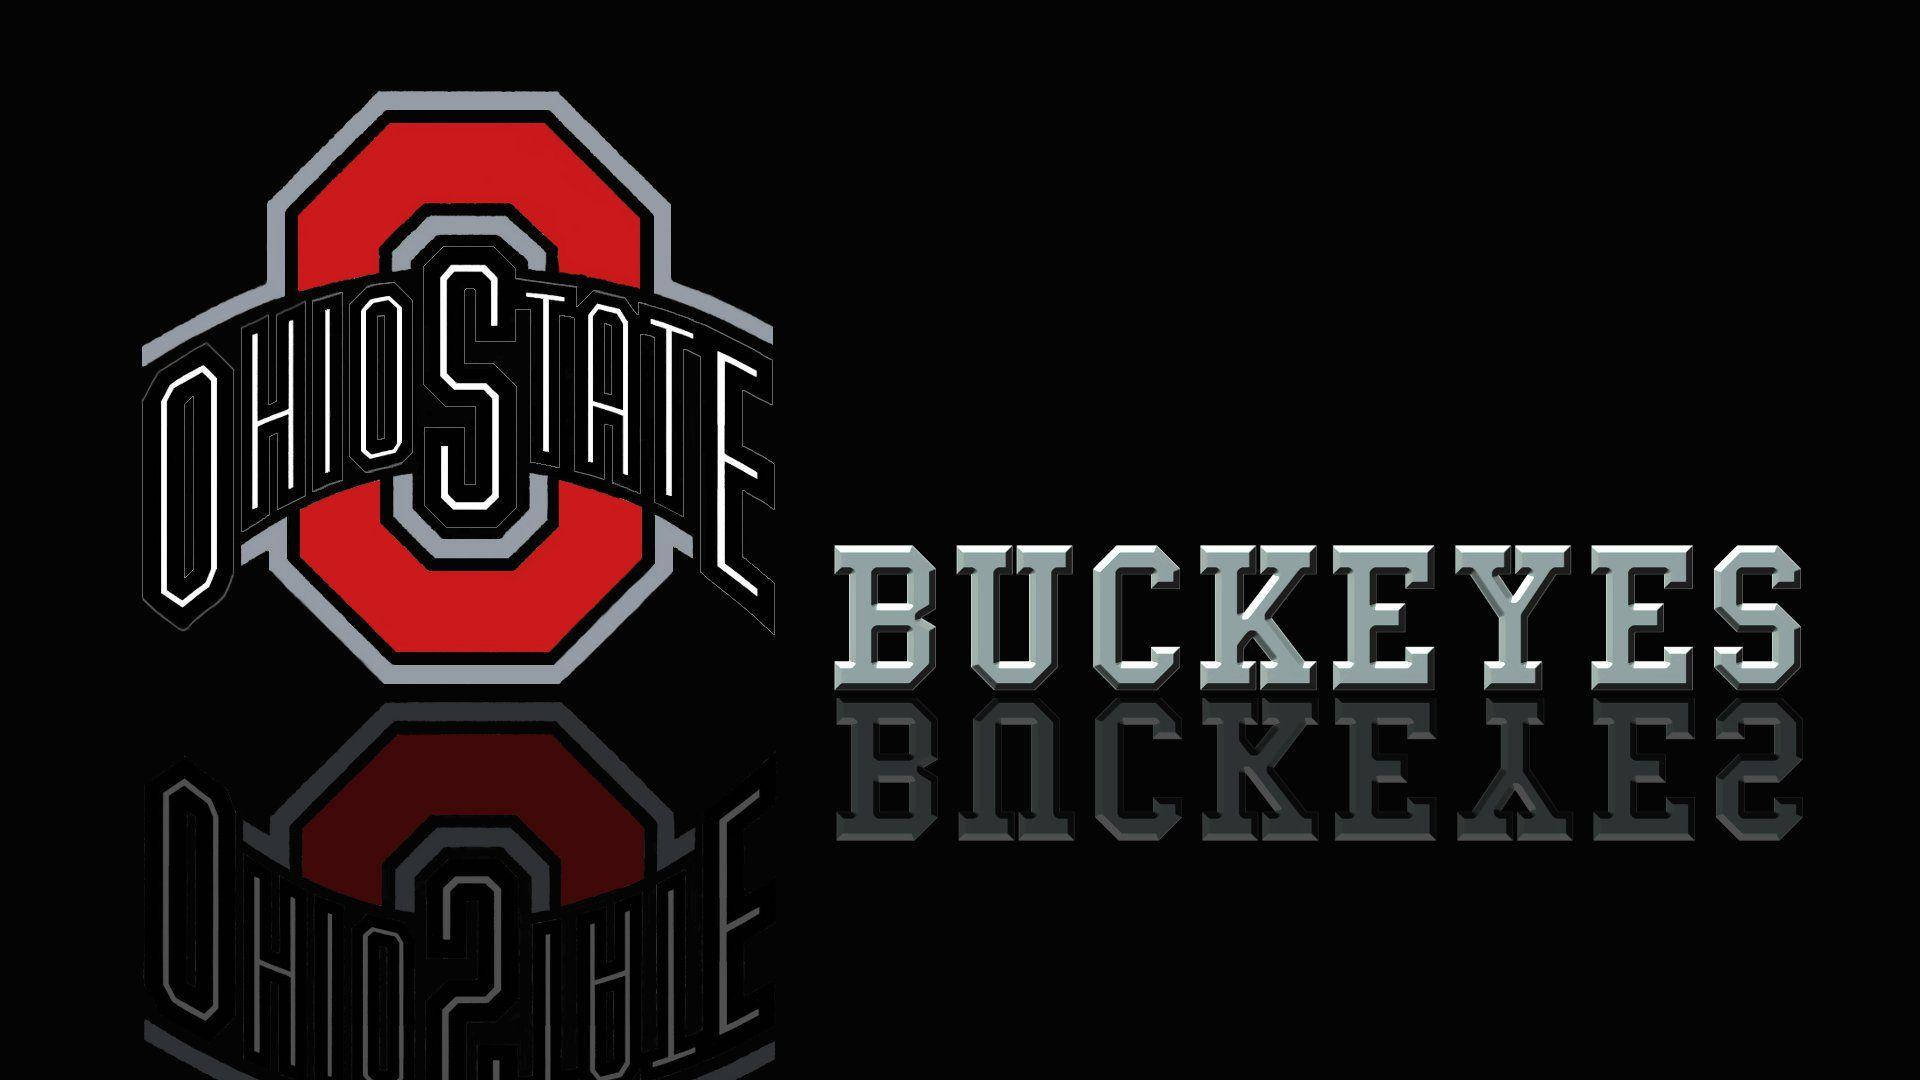 Ohio State Buckeyes Poster Background